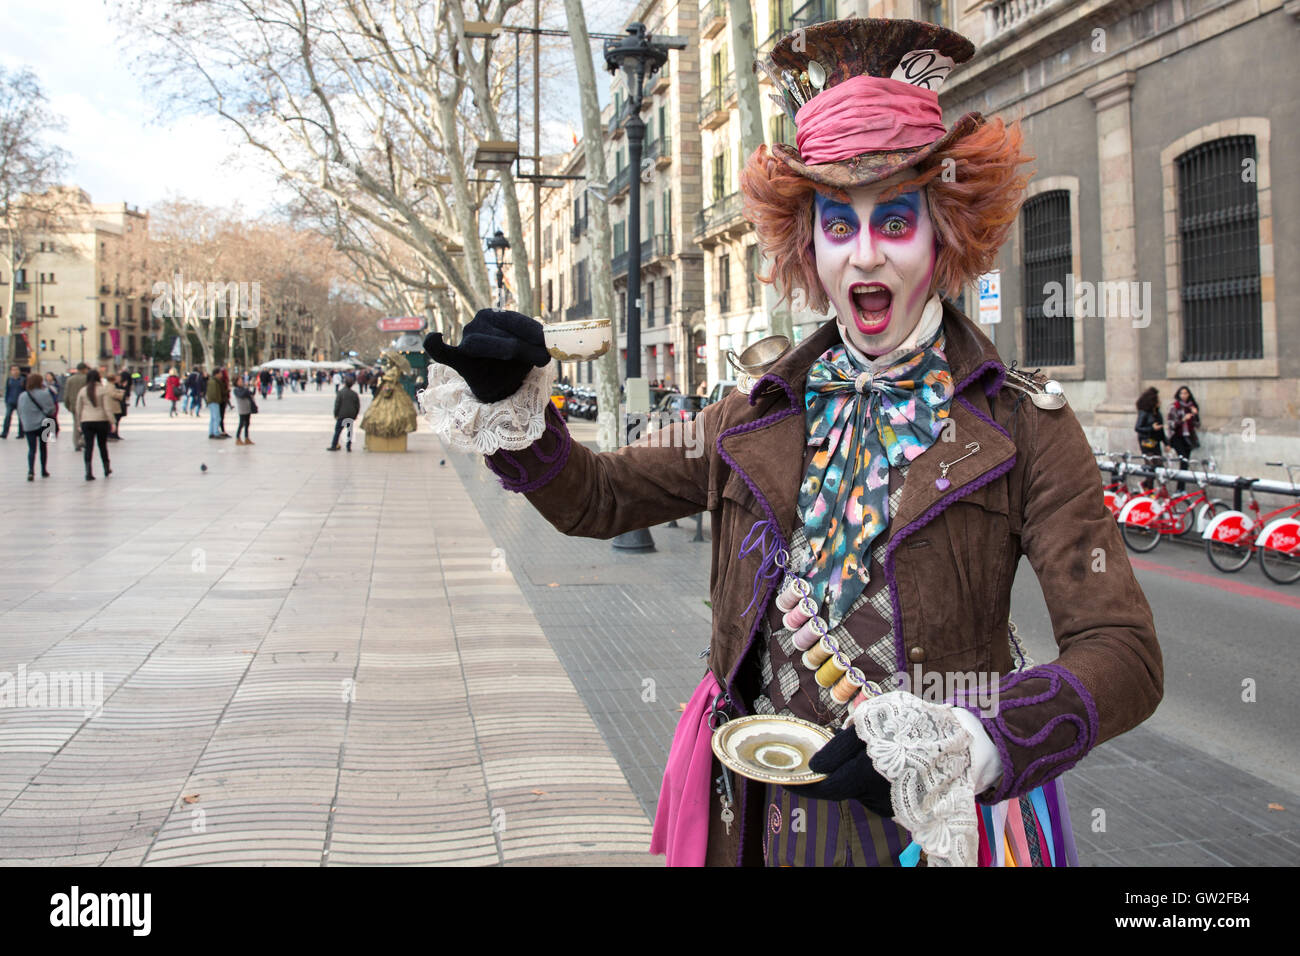 A street performer in Barcelona, Spain. Stock Photo